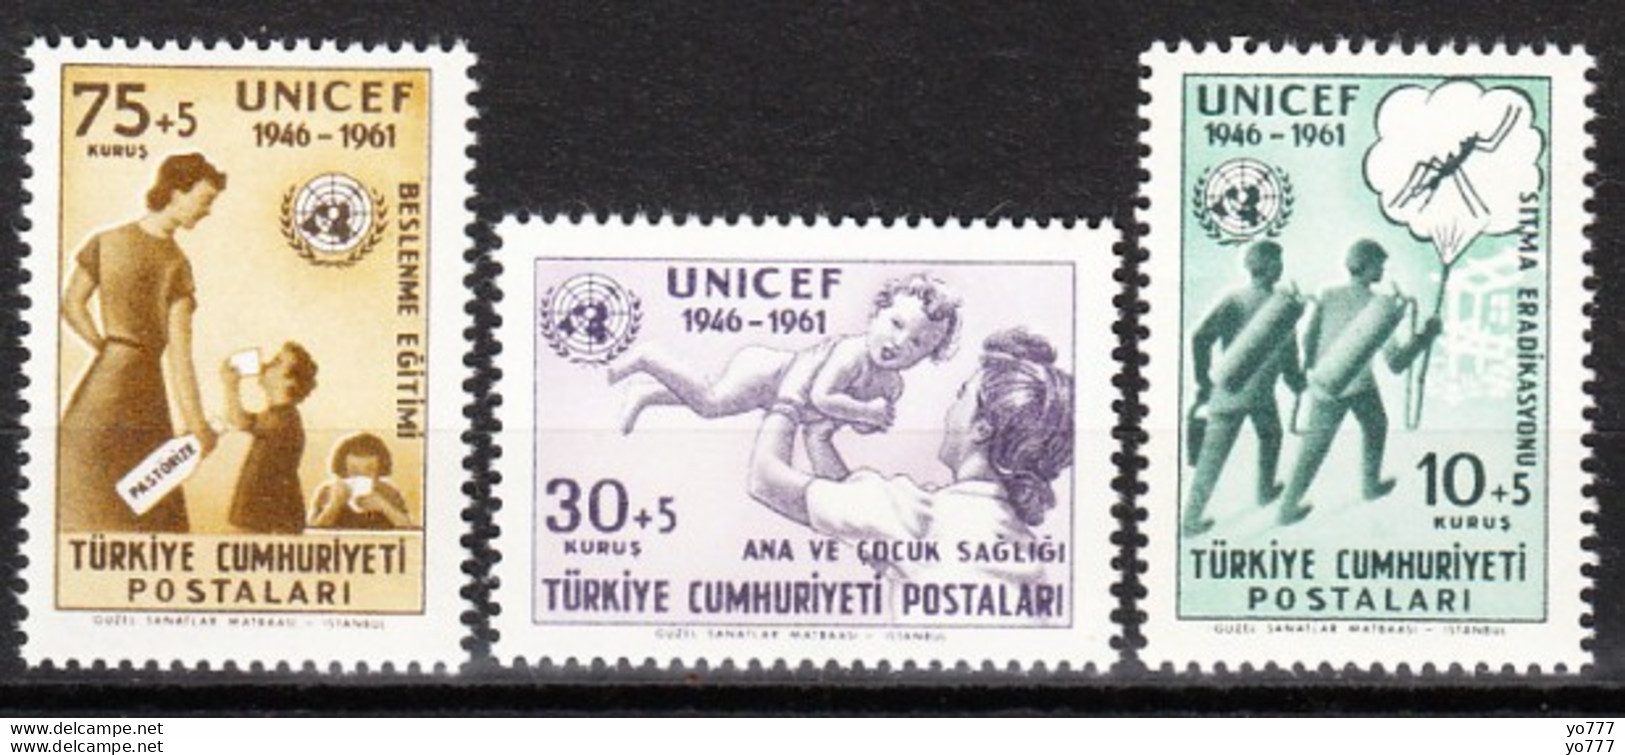 (1827-29) TURKEY 15th ANNIVERSARY OF UNICEF MNH** - Unused Stamps